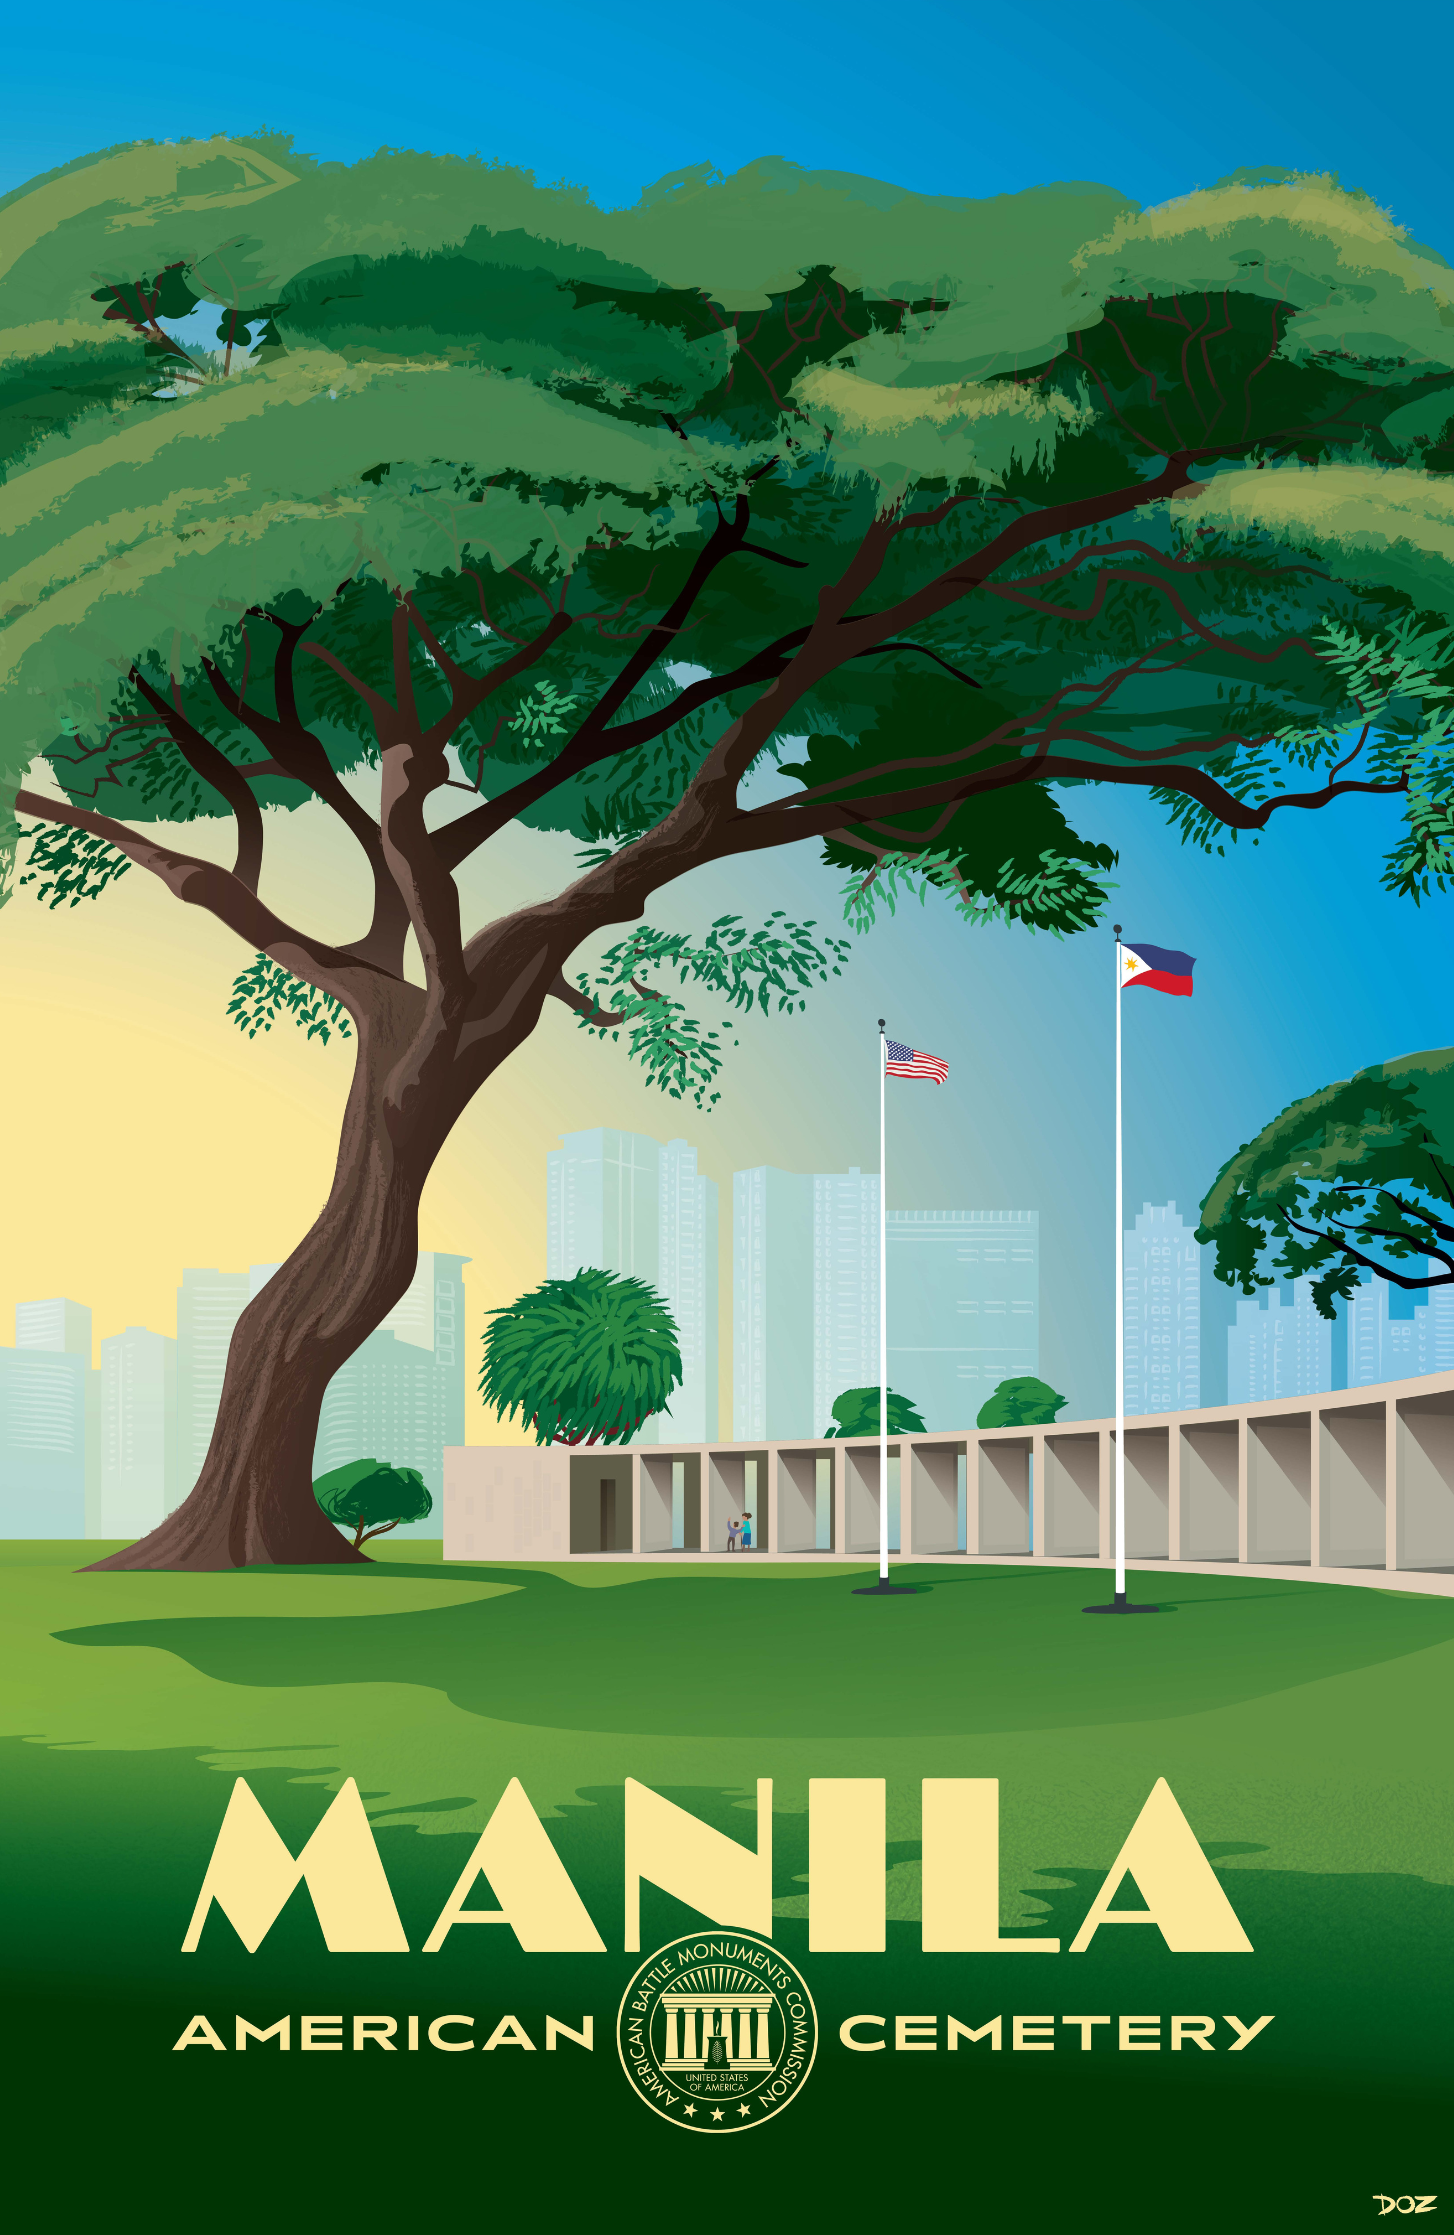 Vintage poster of Manila American Cemetery created to mark ABMC Centennial